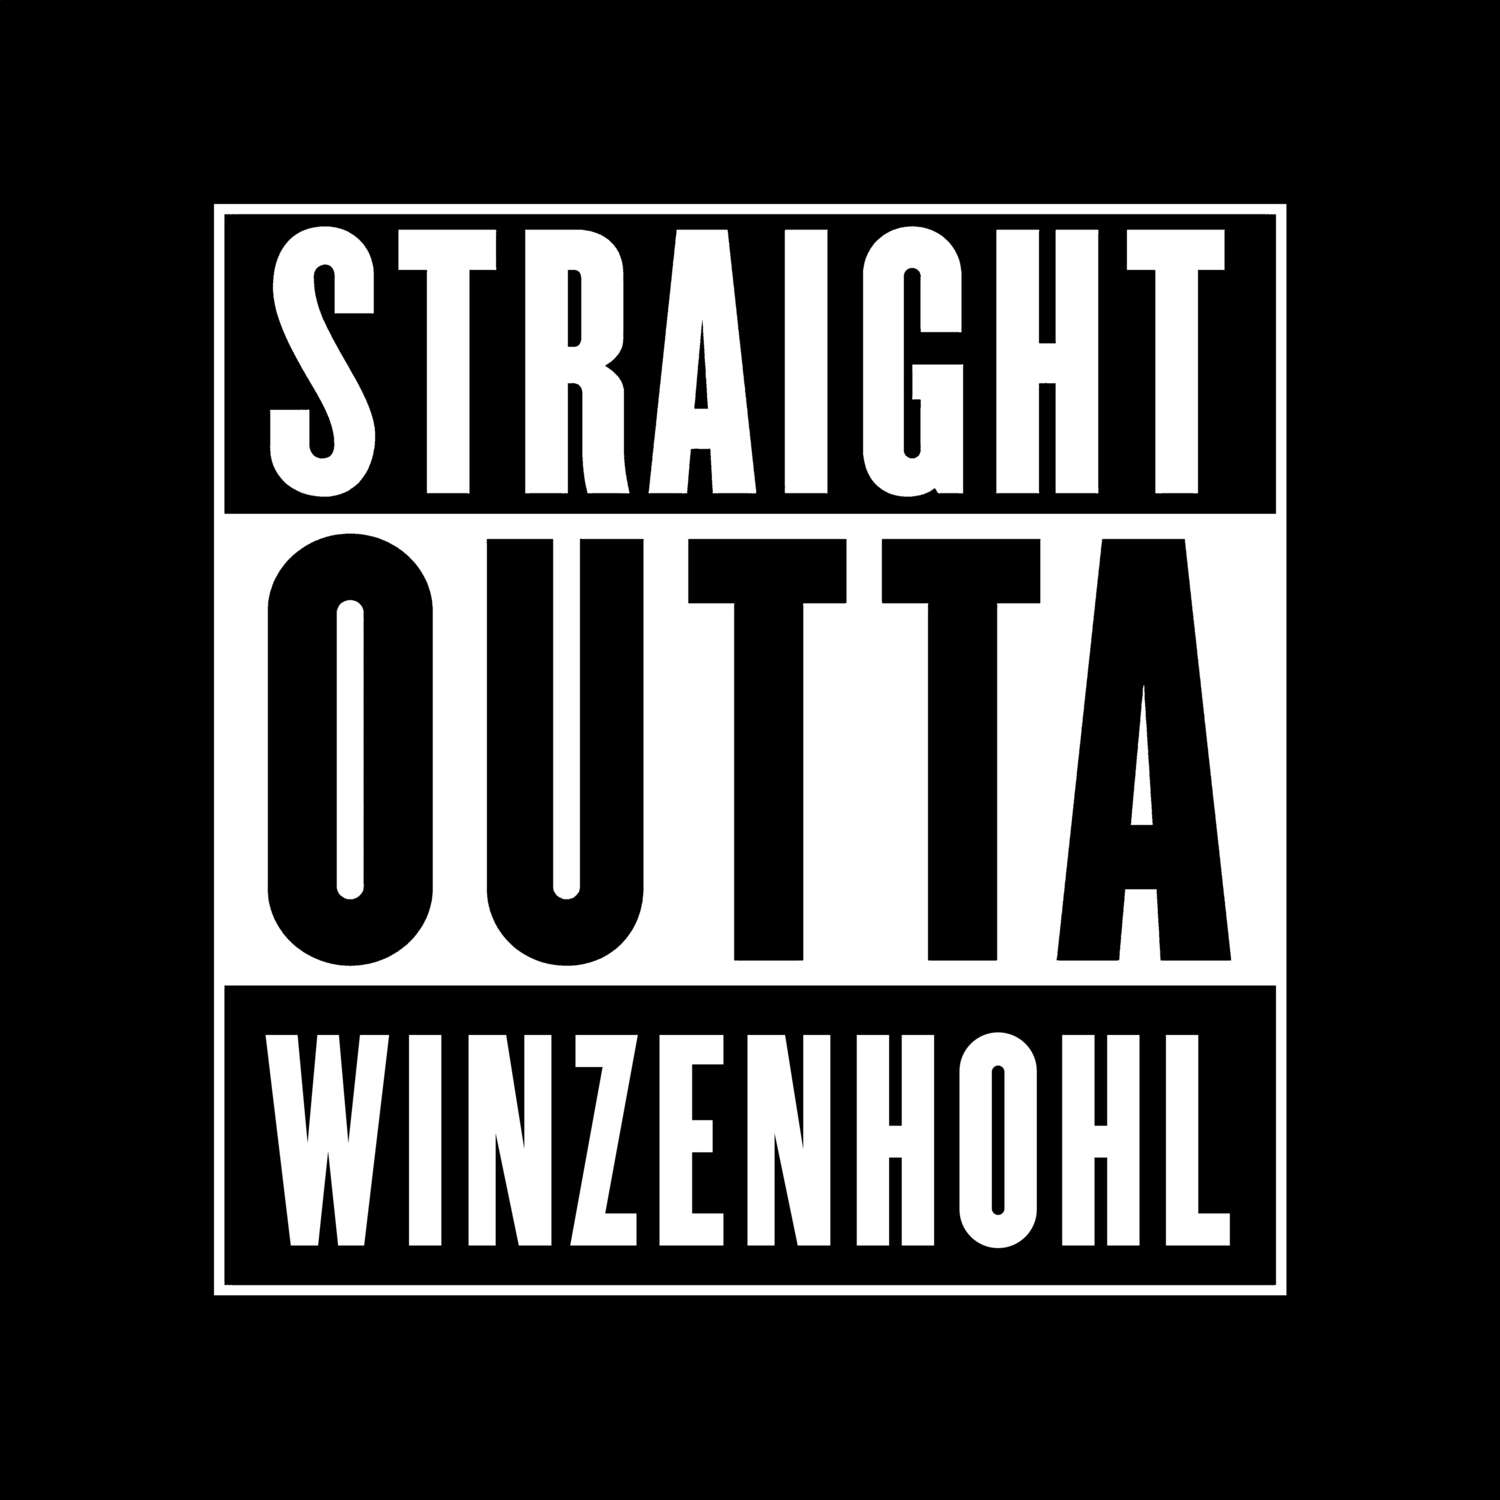 Winzenhohl T-Shirt »Straight Outta«